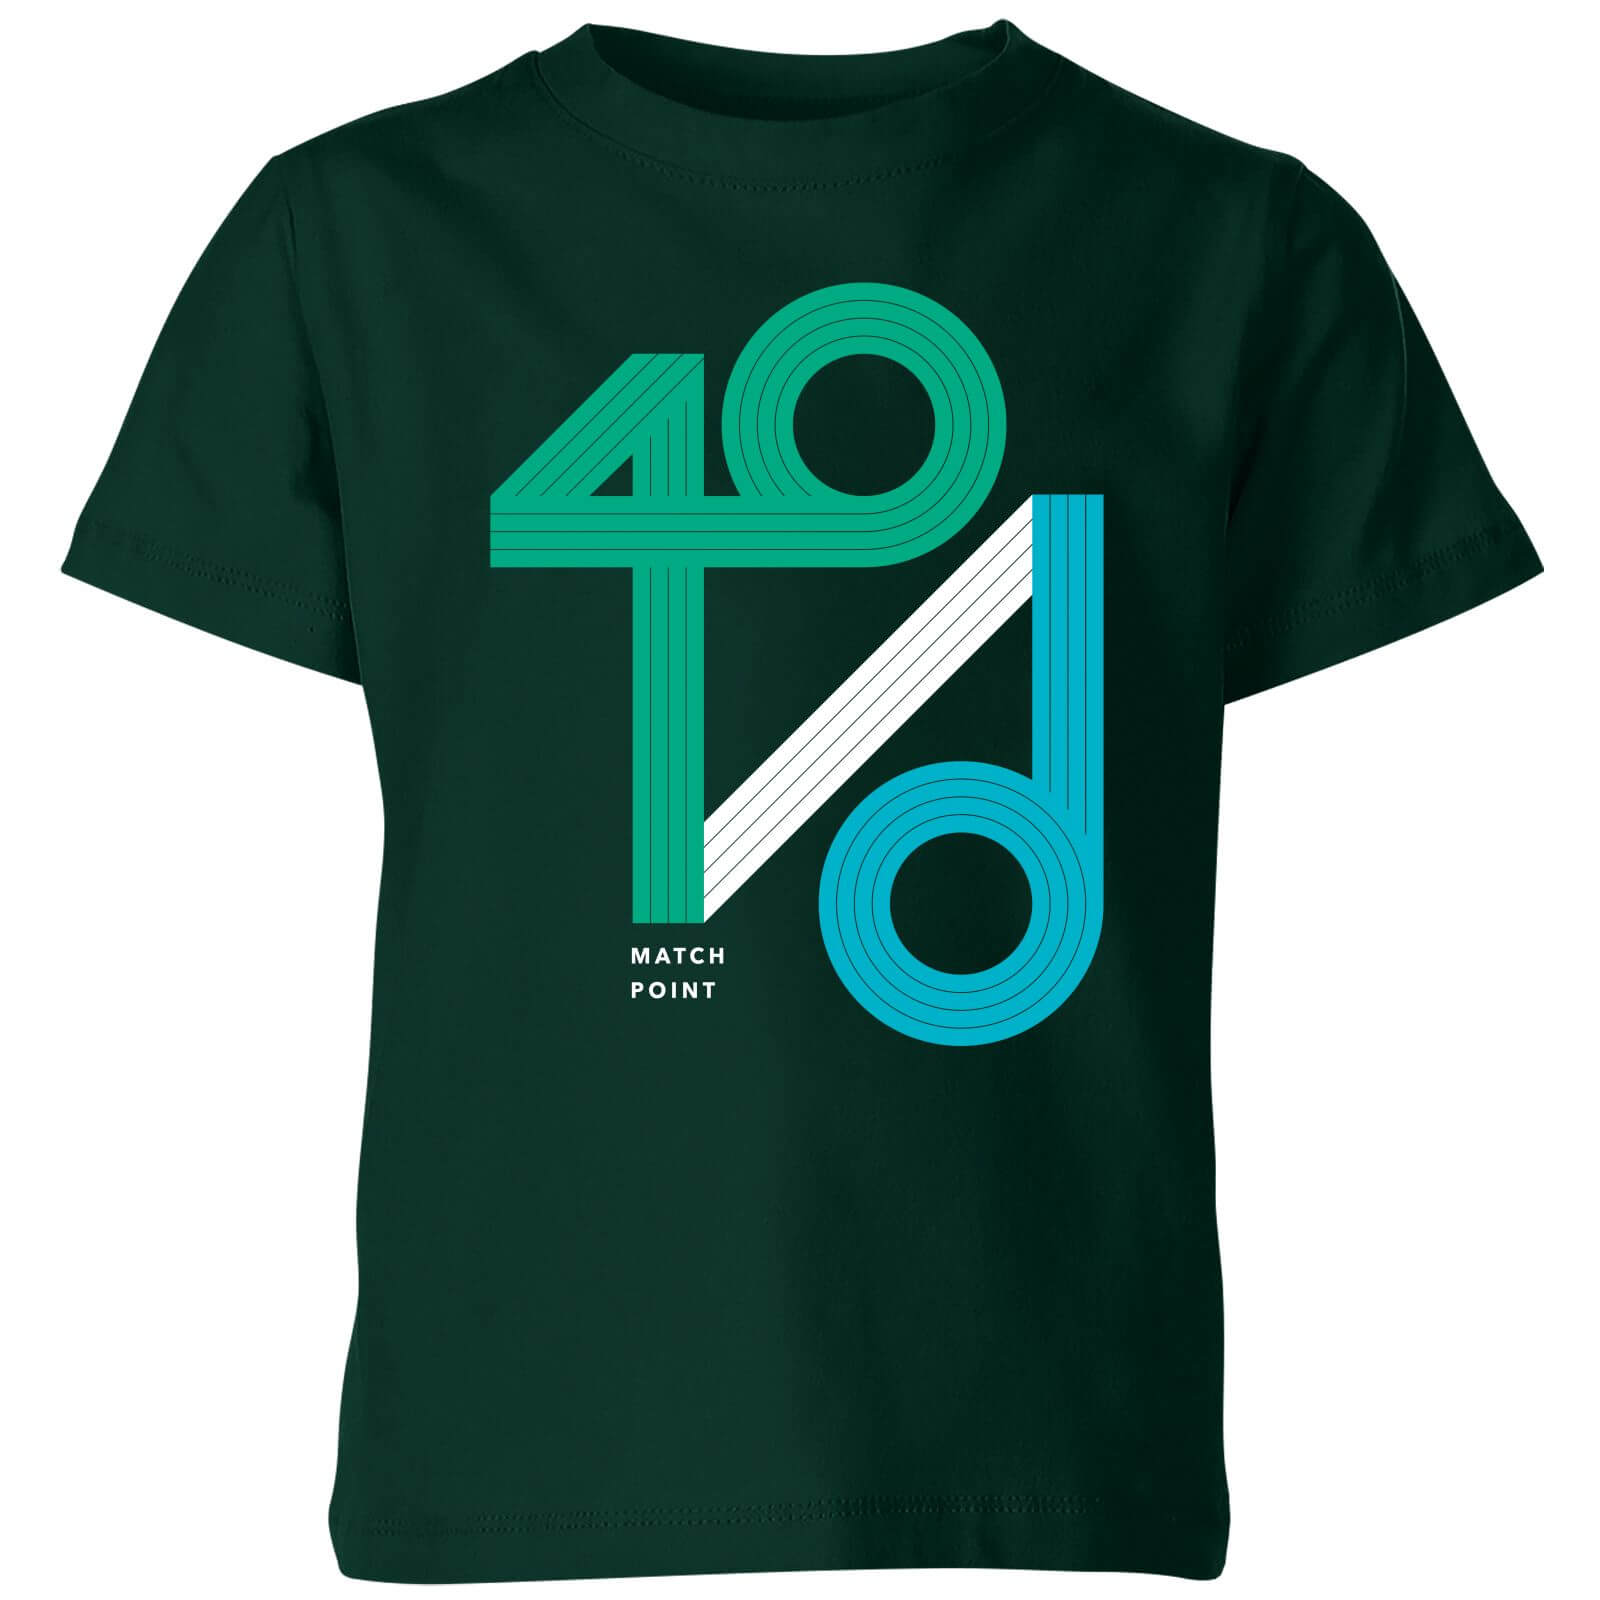 40 / d Match Point Kids' T-Shirt - Forest Green - 3-4 Years - Forest Green